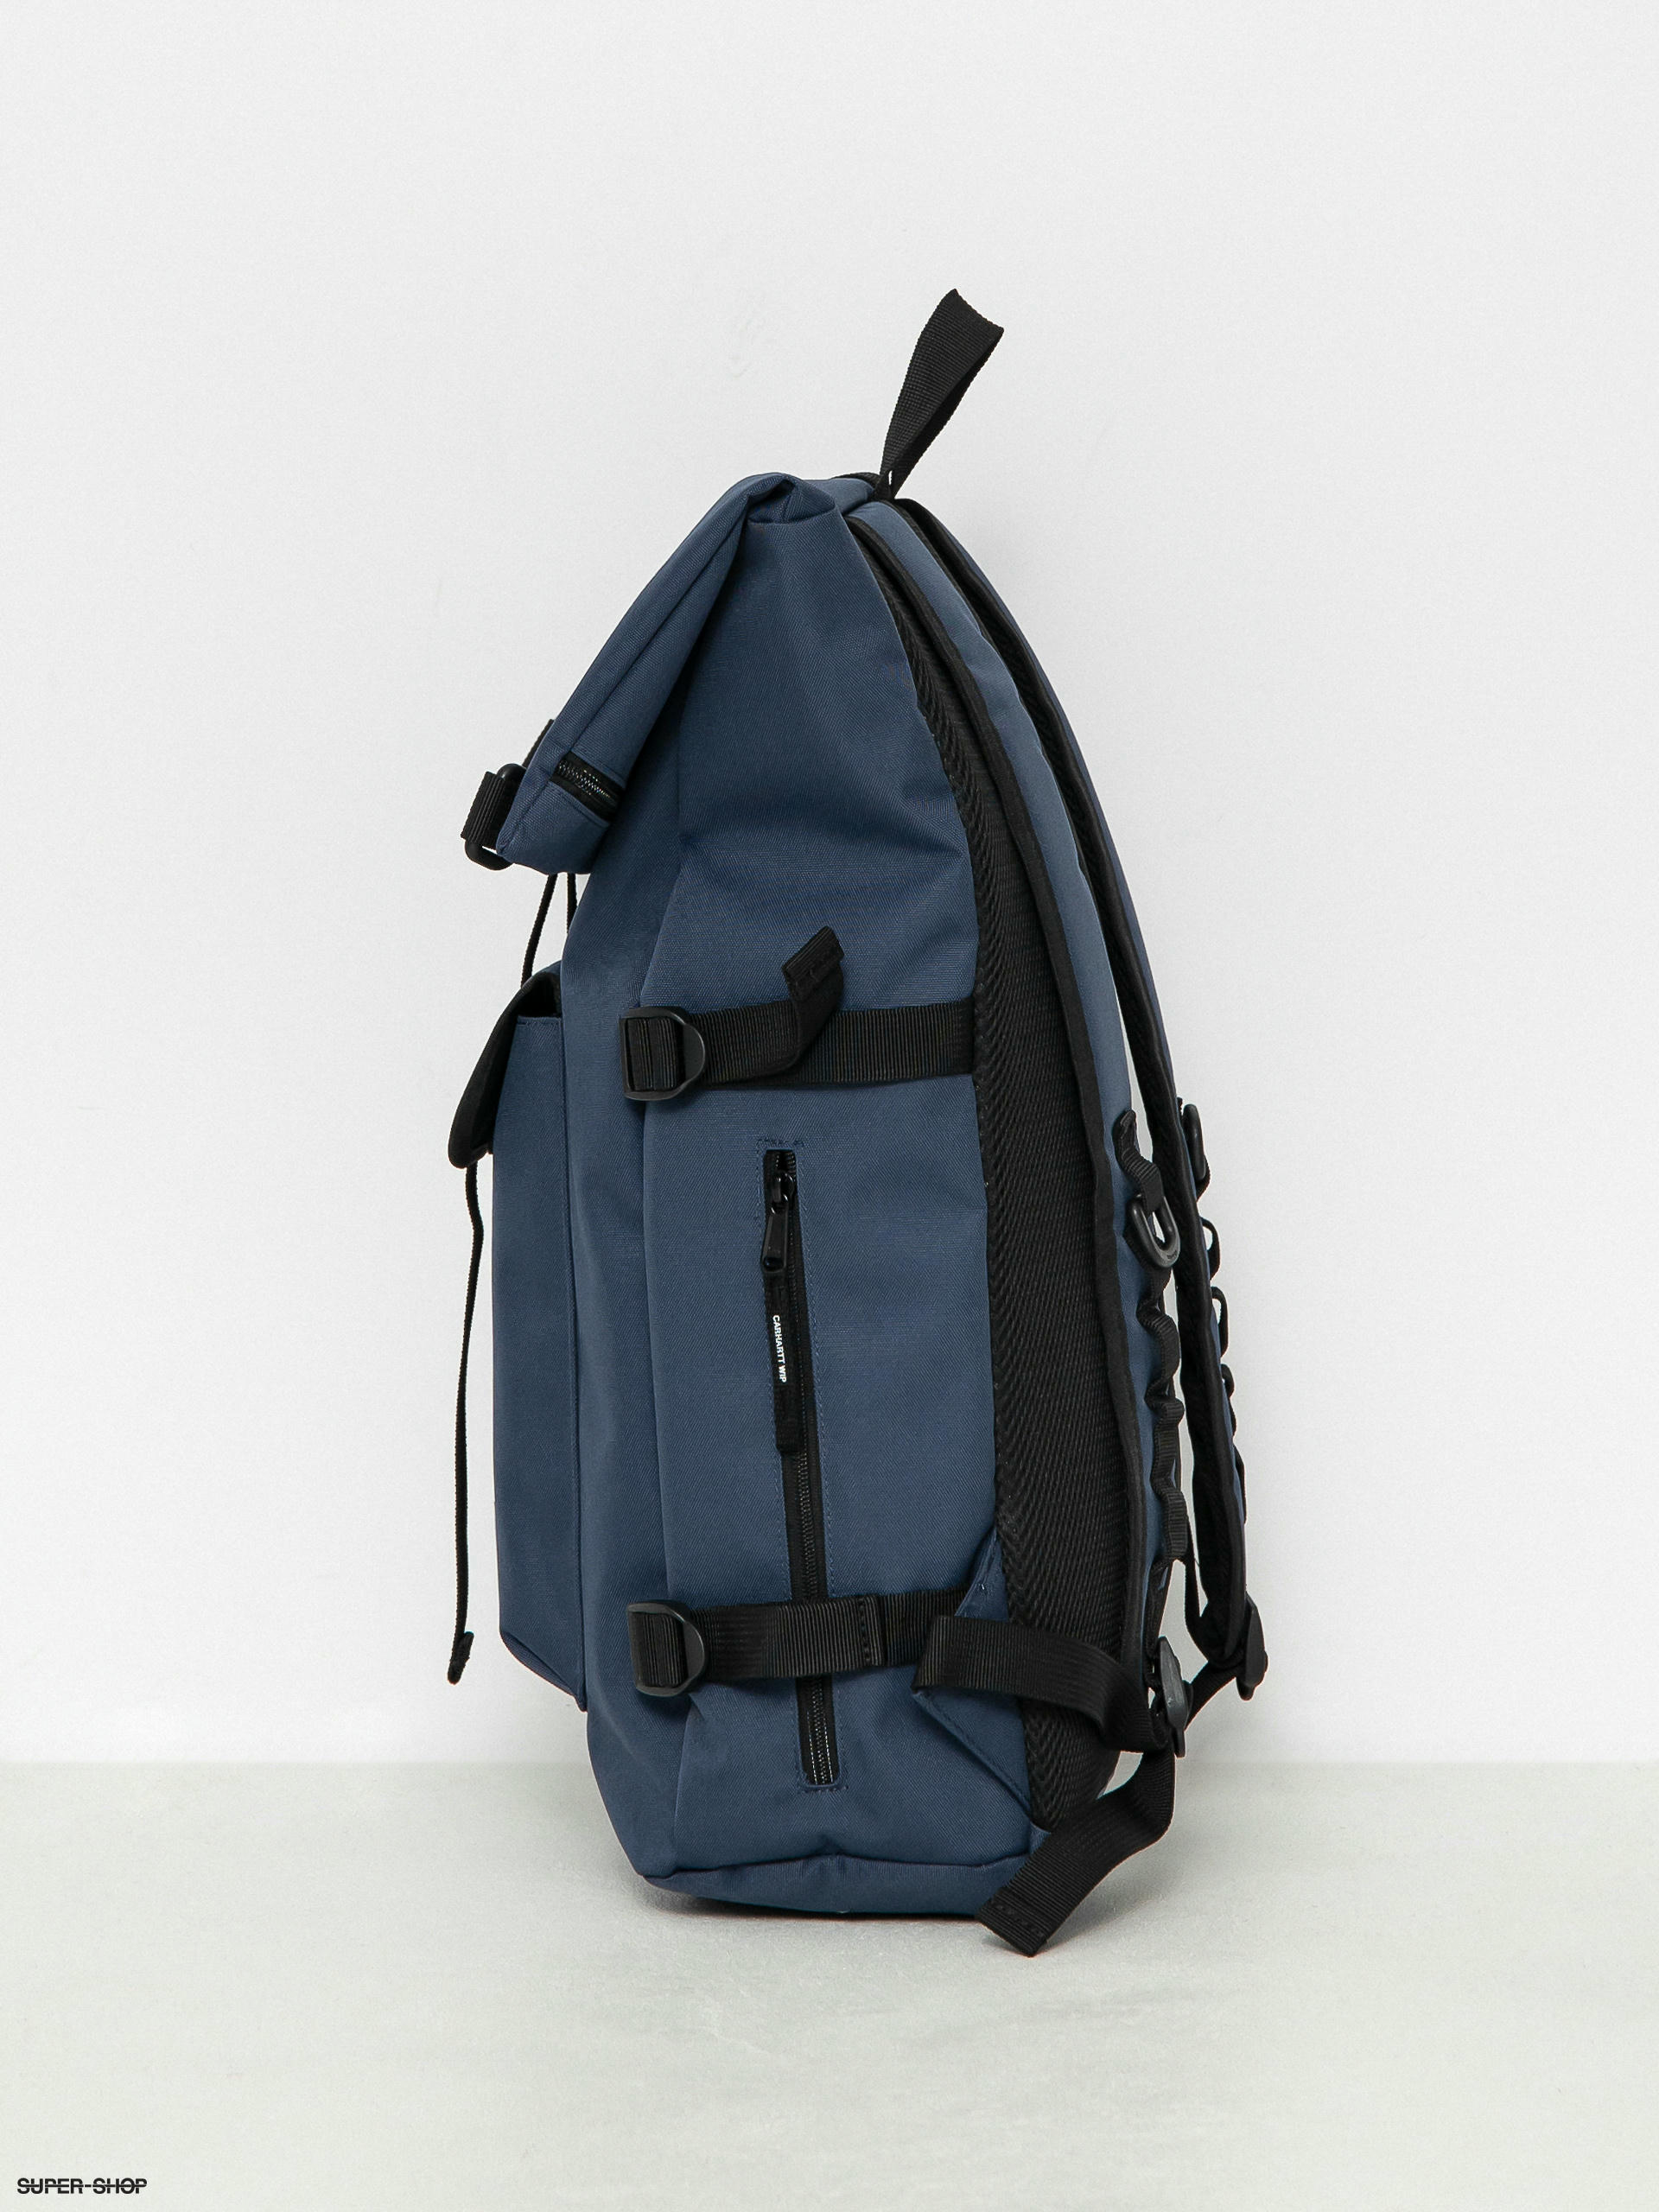 Philis Backpack Storm Blue